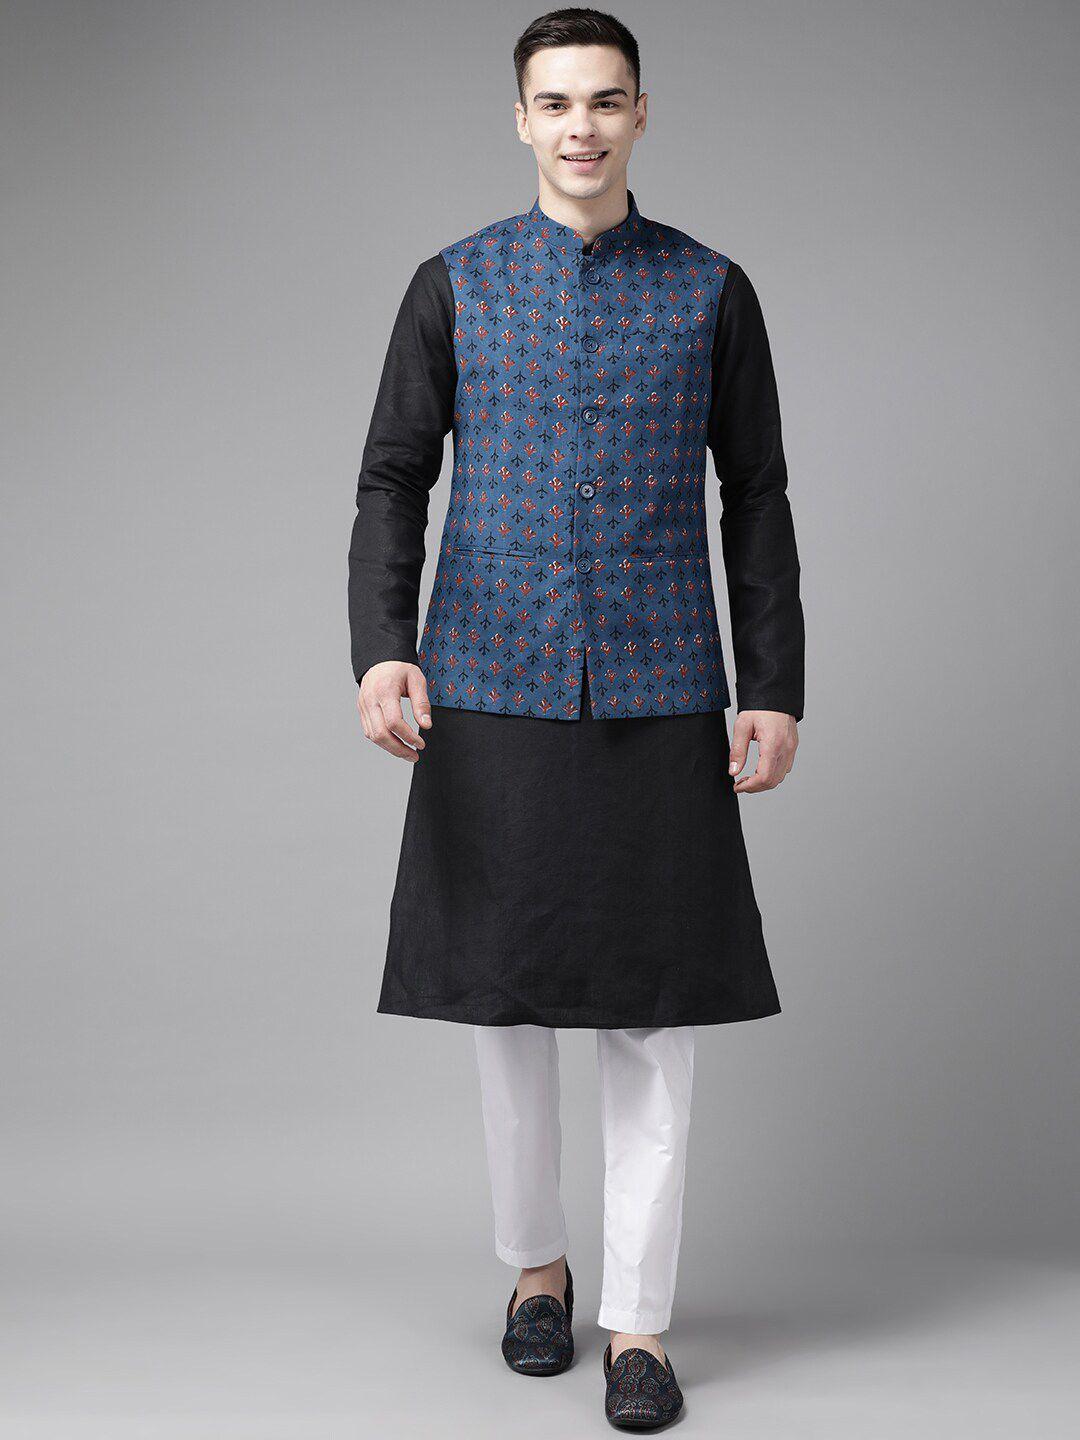 see-designs-printed-pure-cotton-nehru-jacket